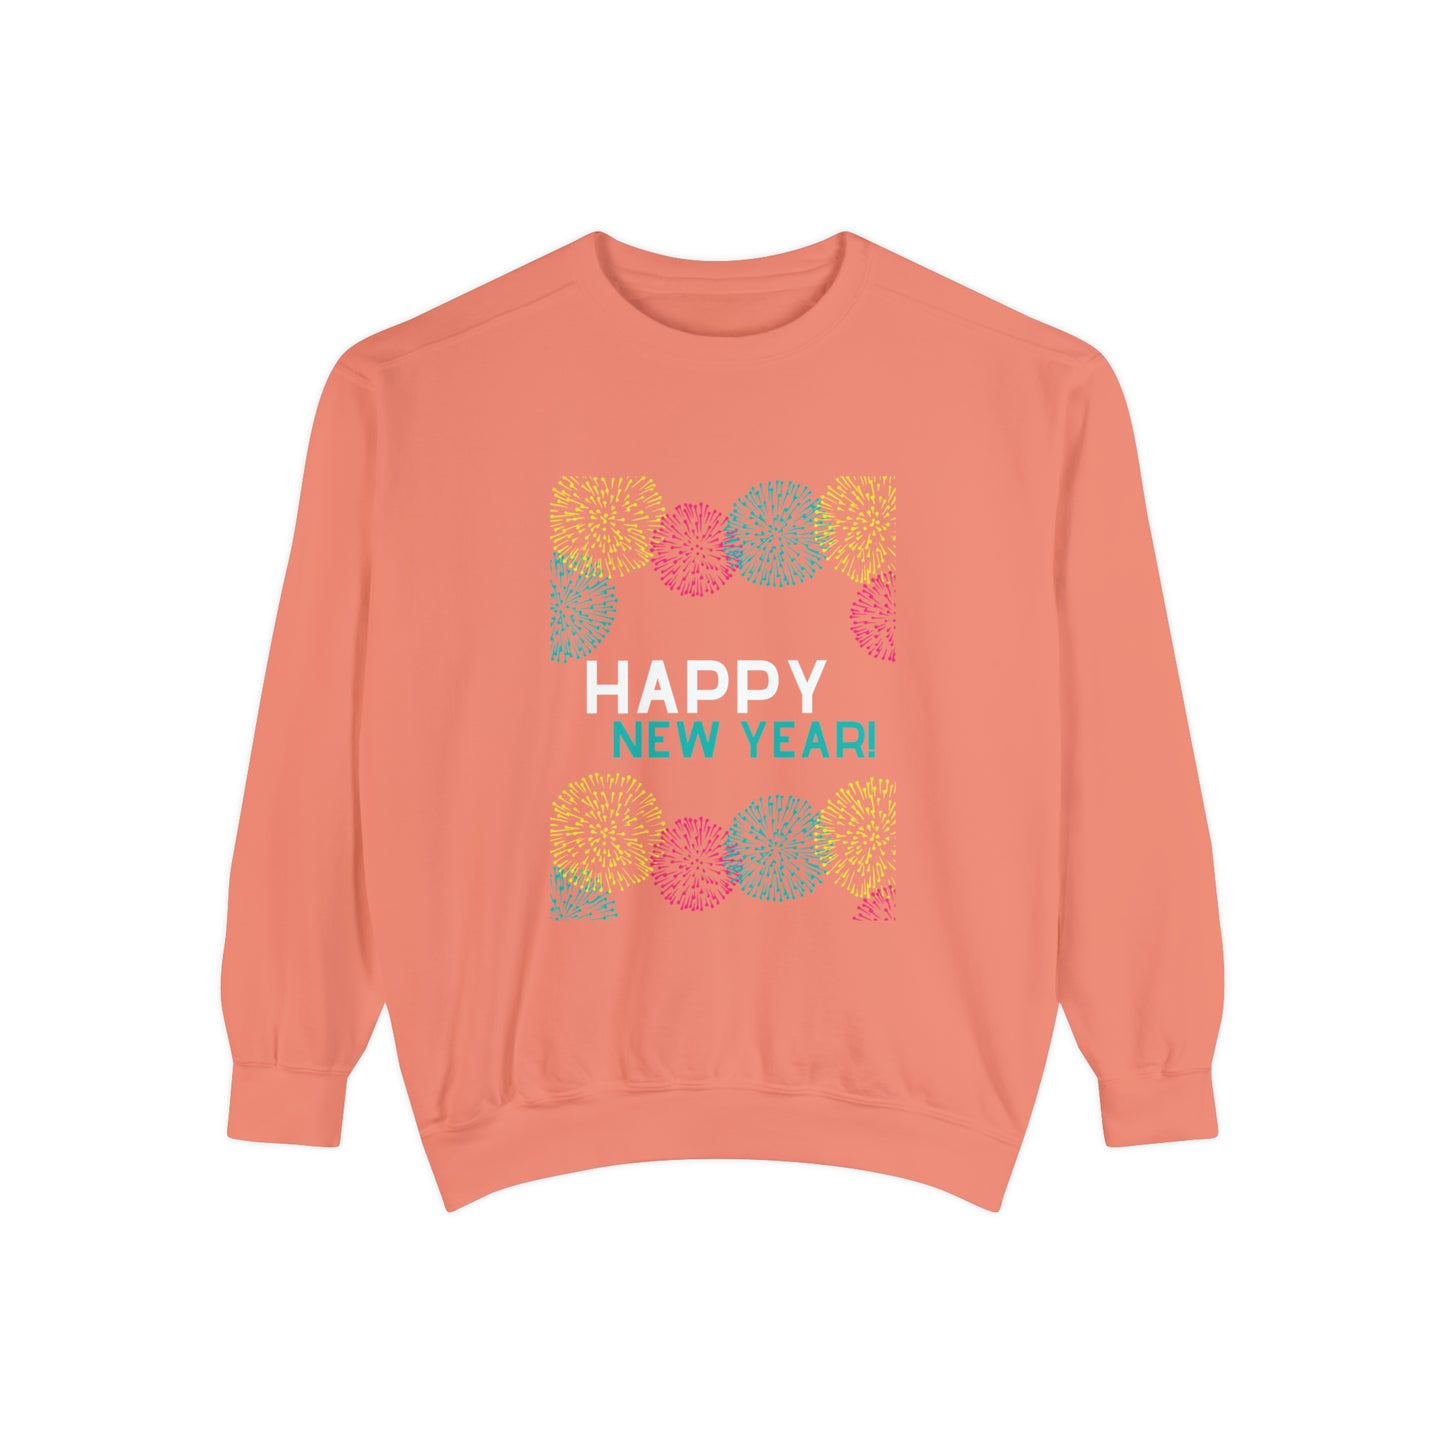 HAPPY NEW YEAR SWEATSHIRT Unisex Garment-Dyed Sweatshirt